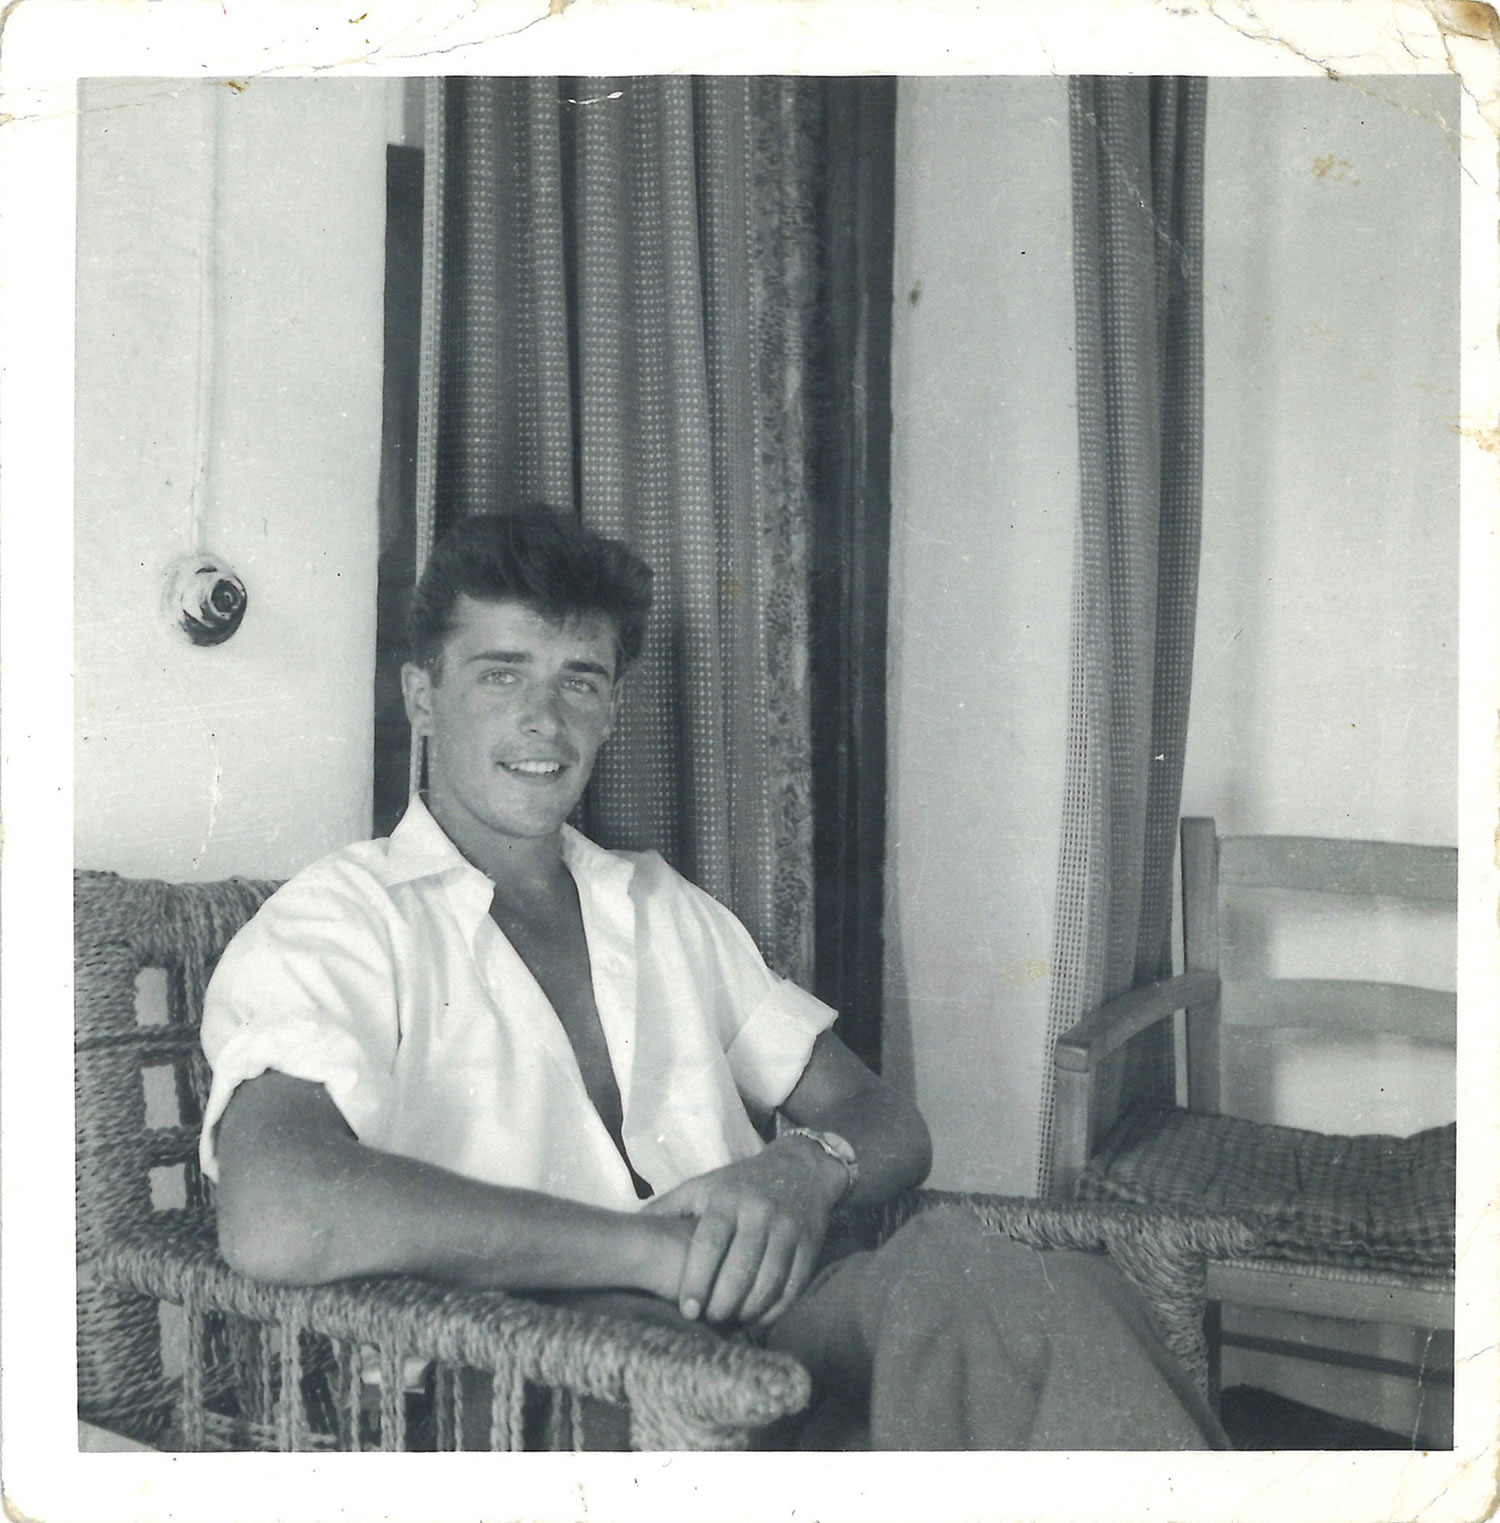 Joe Sugg's grandfather, Richard Chapman - 1963